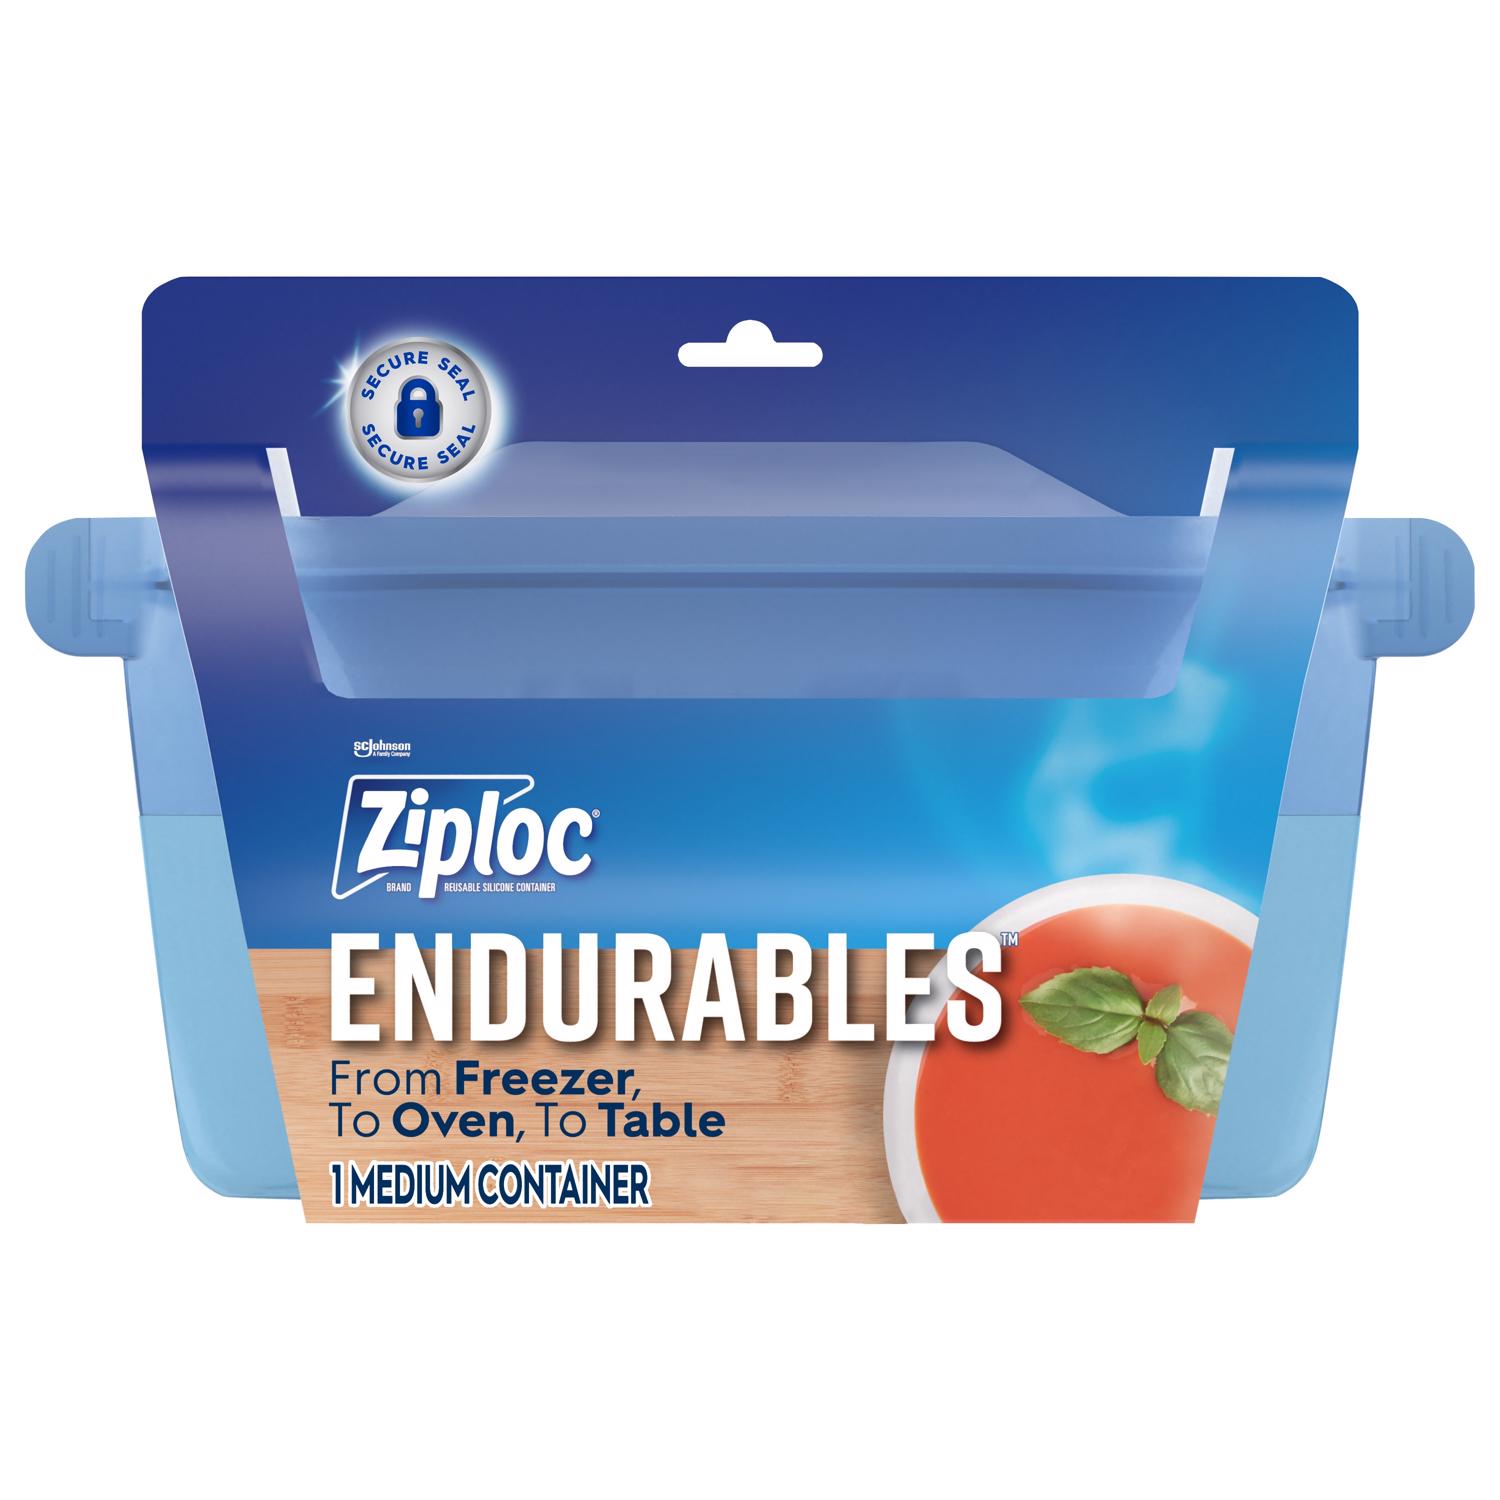 Photos - Other Accessories Ziploc Endurables 32 oz Blue Food Storage Container 1 pk 09245 